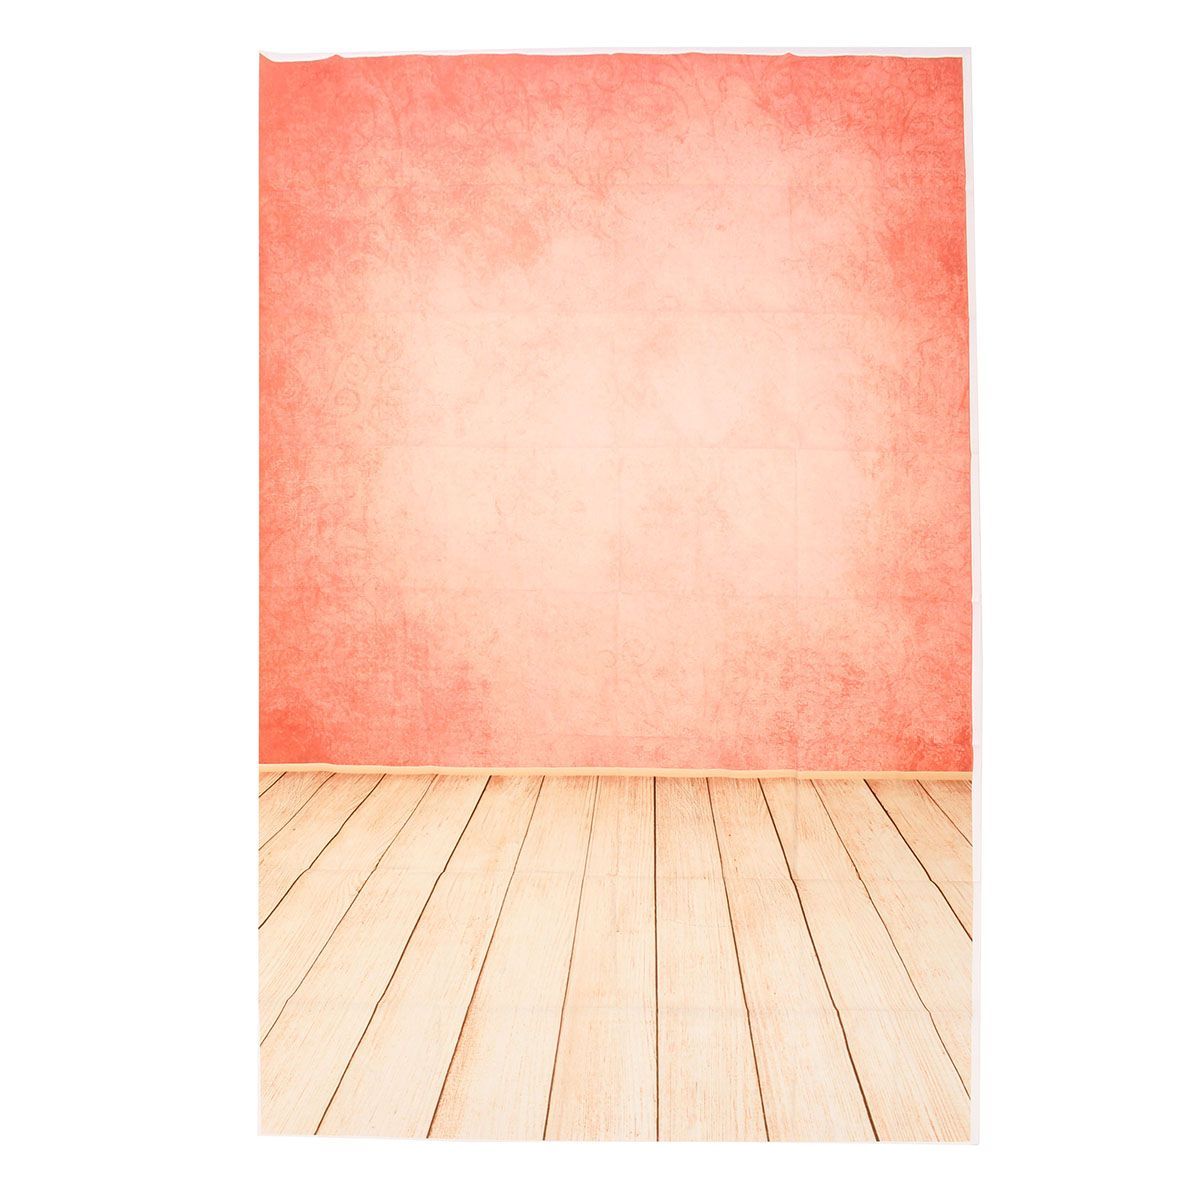 5x7ft-Wall-Wooden-Floor-Photo-Studio-Background-Props-Vinyl-Photography-Backdrop-1159176